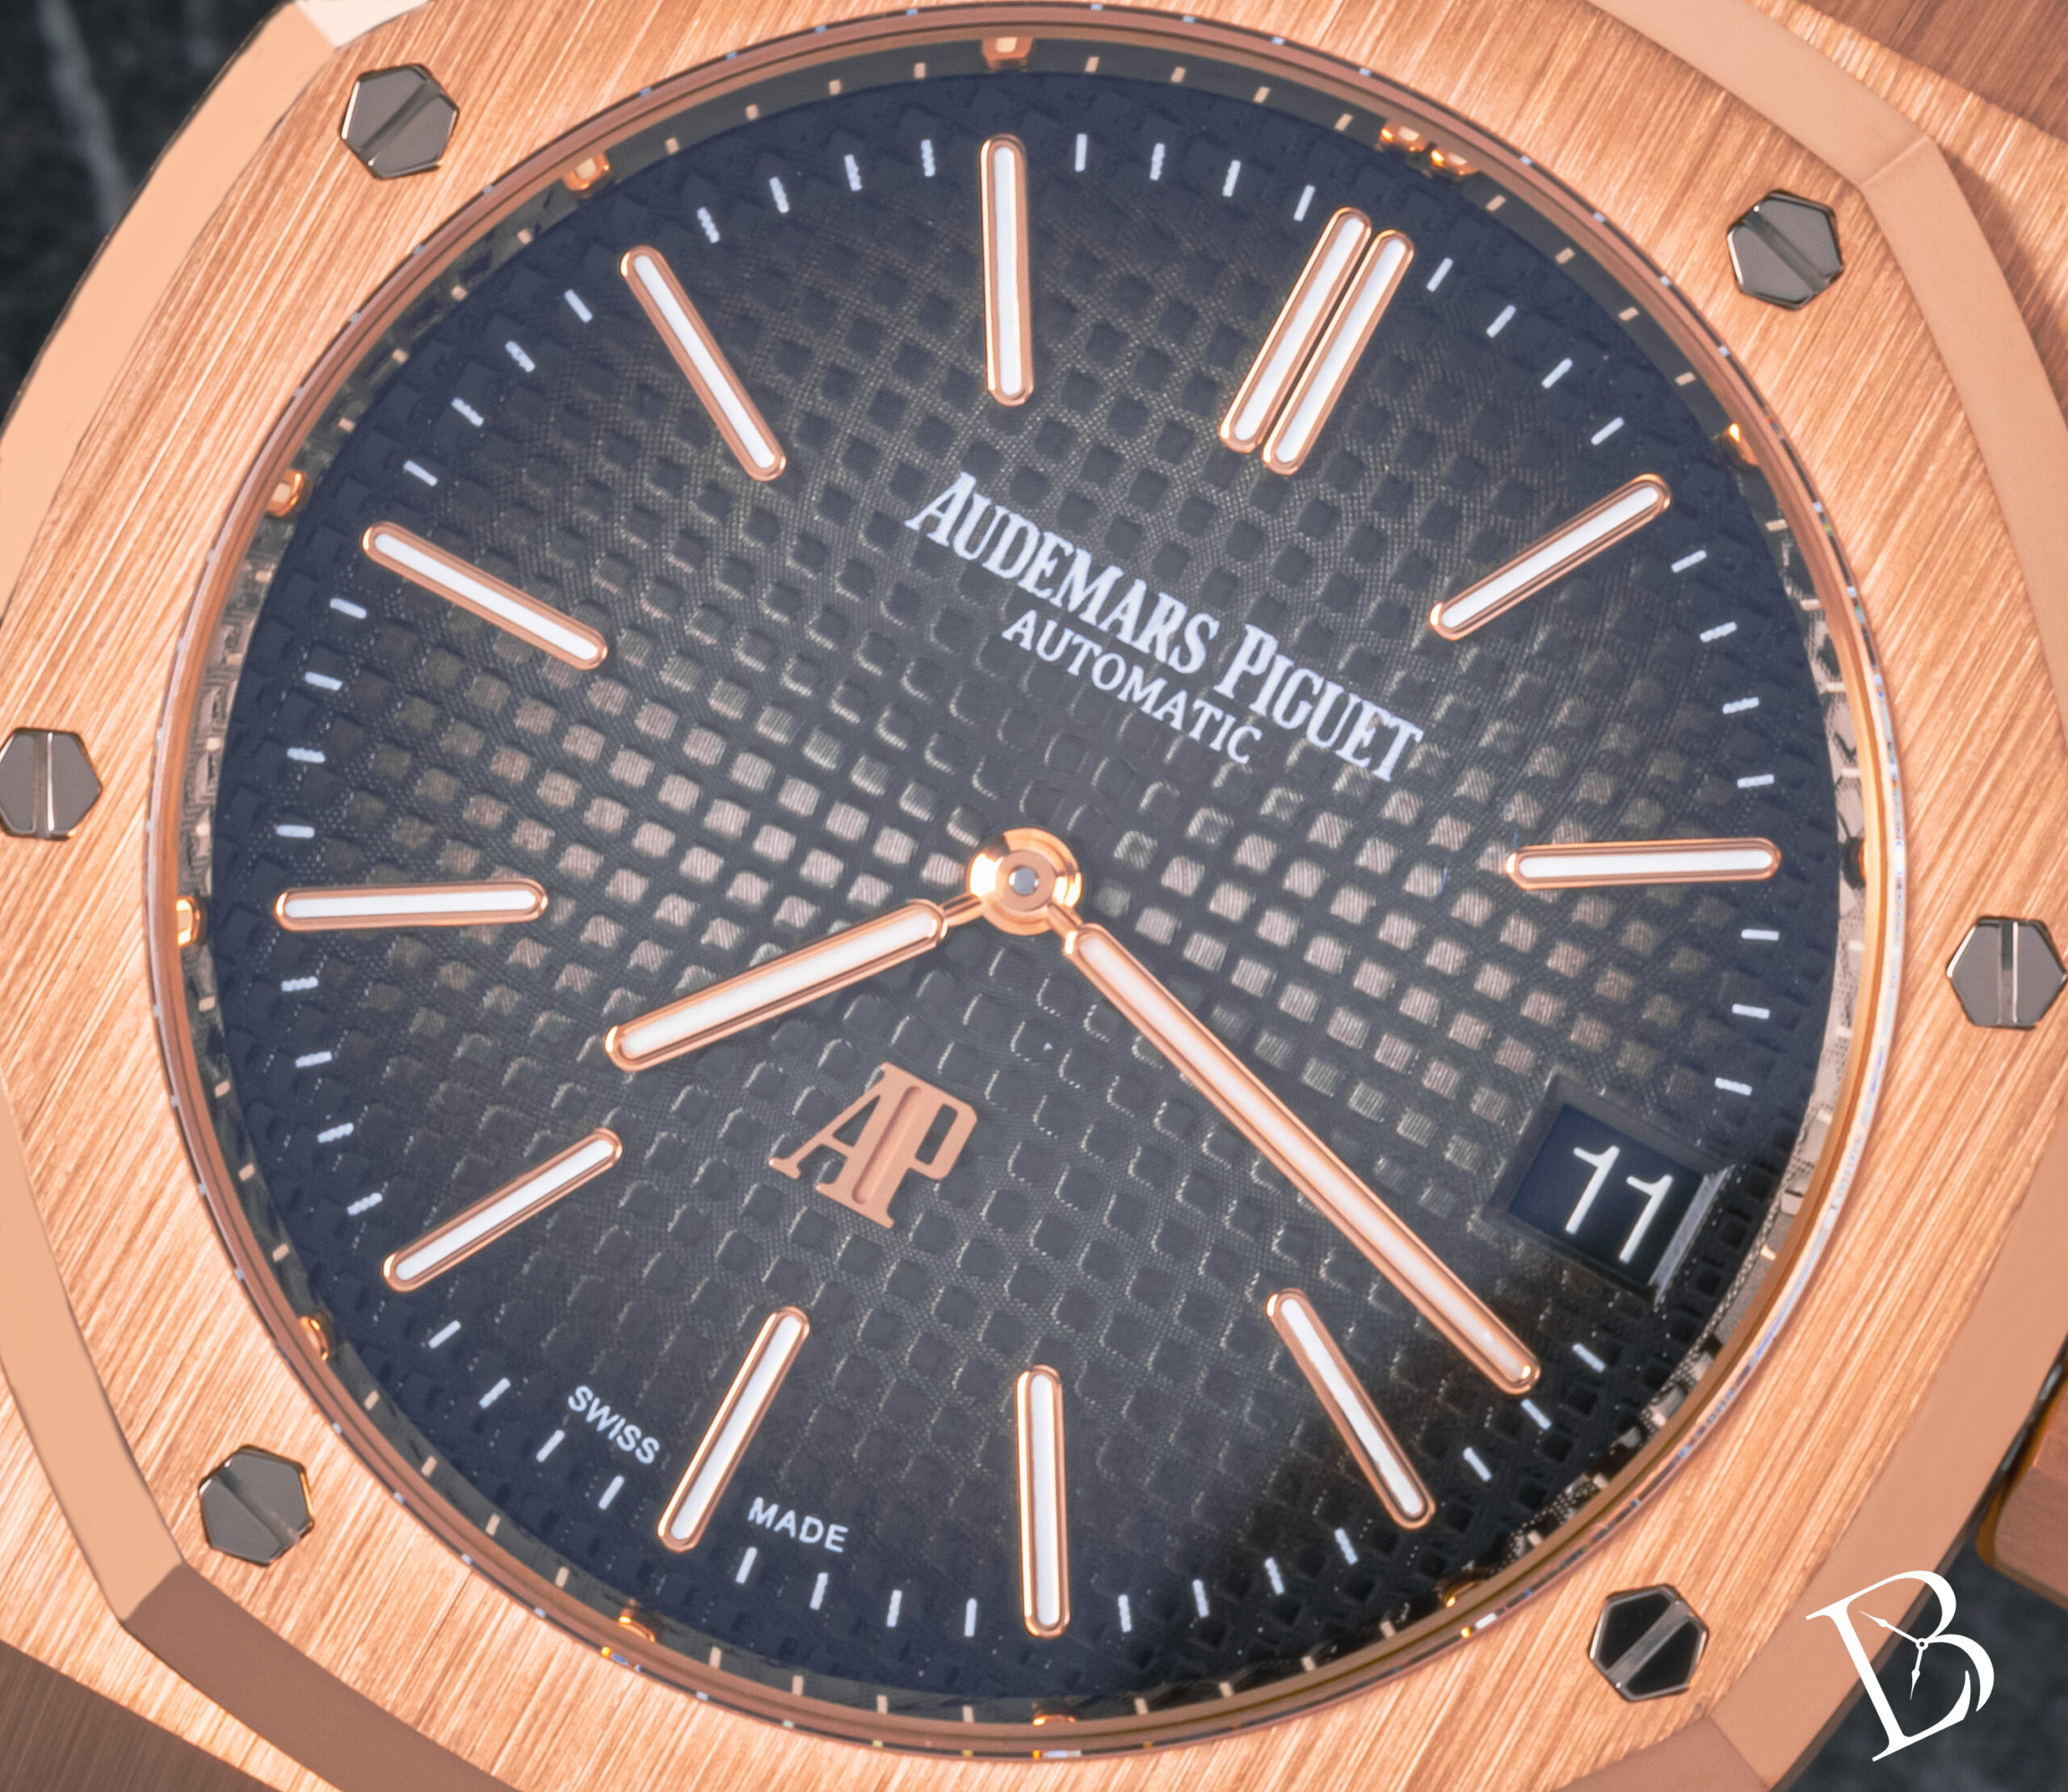 Audemars Piguet luxury watches for men review & price list